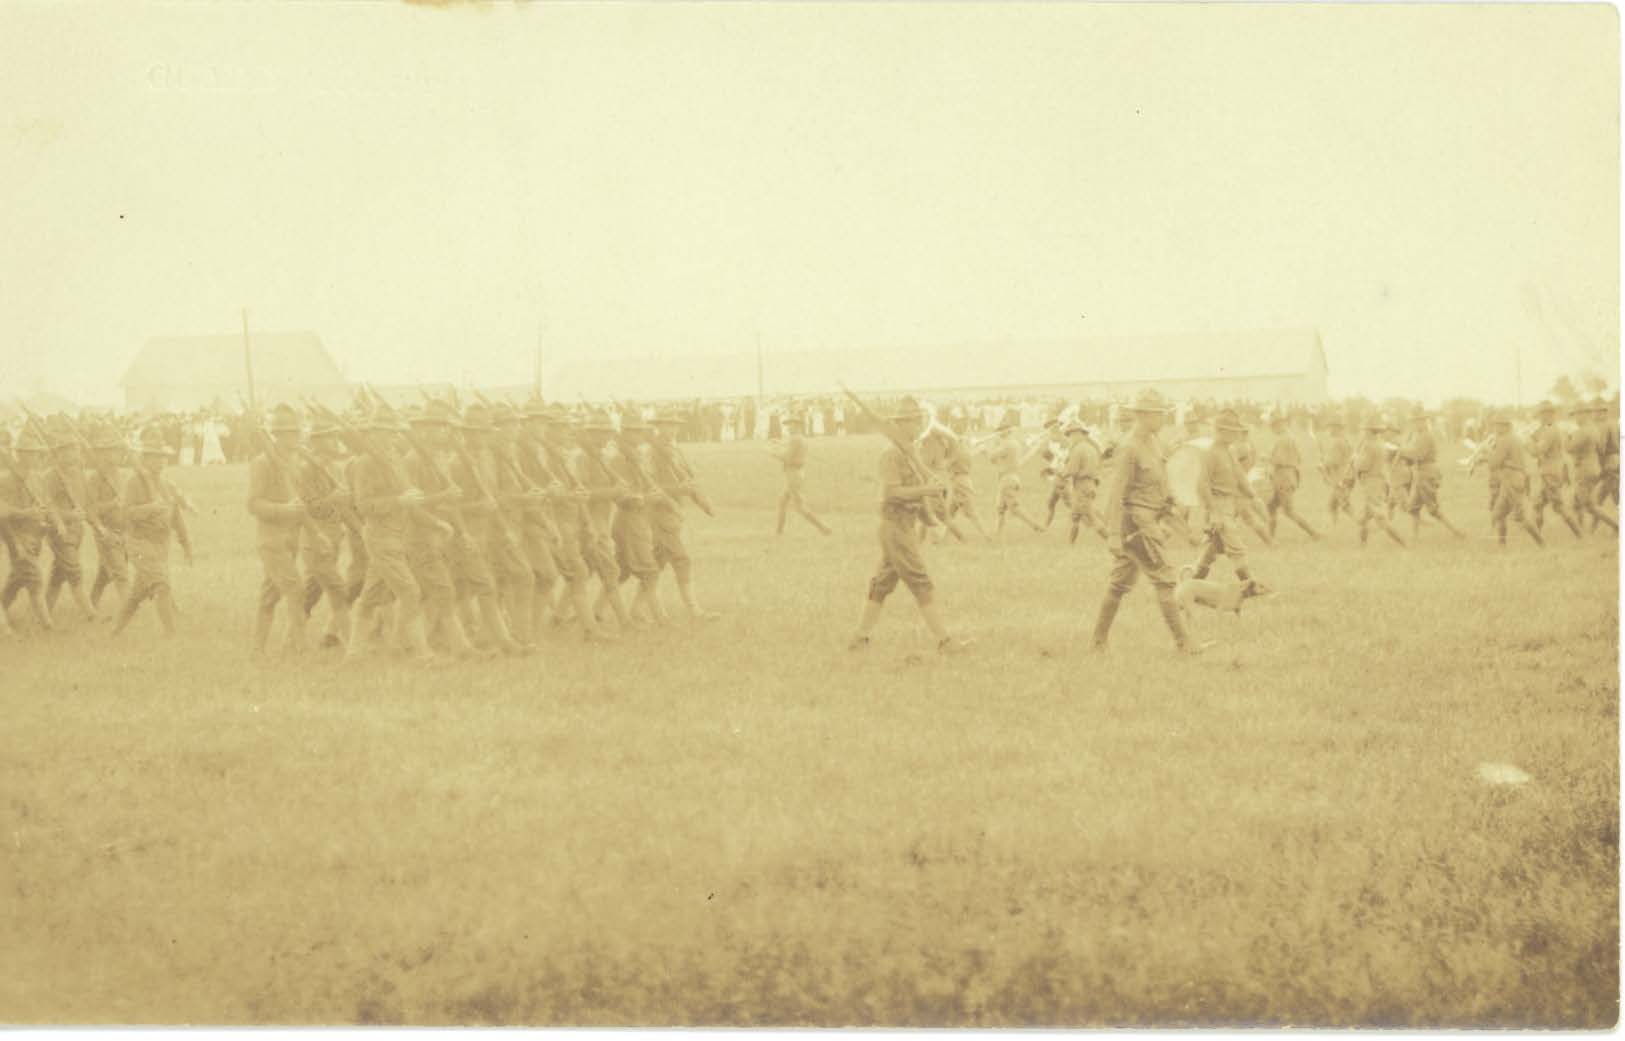 On parade, Camp Keyes, 1917